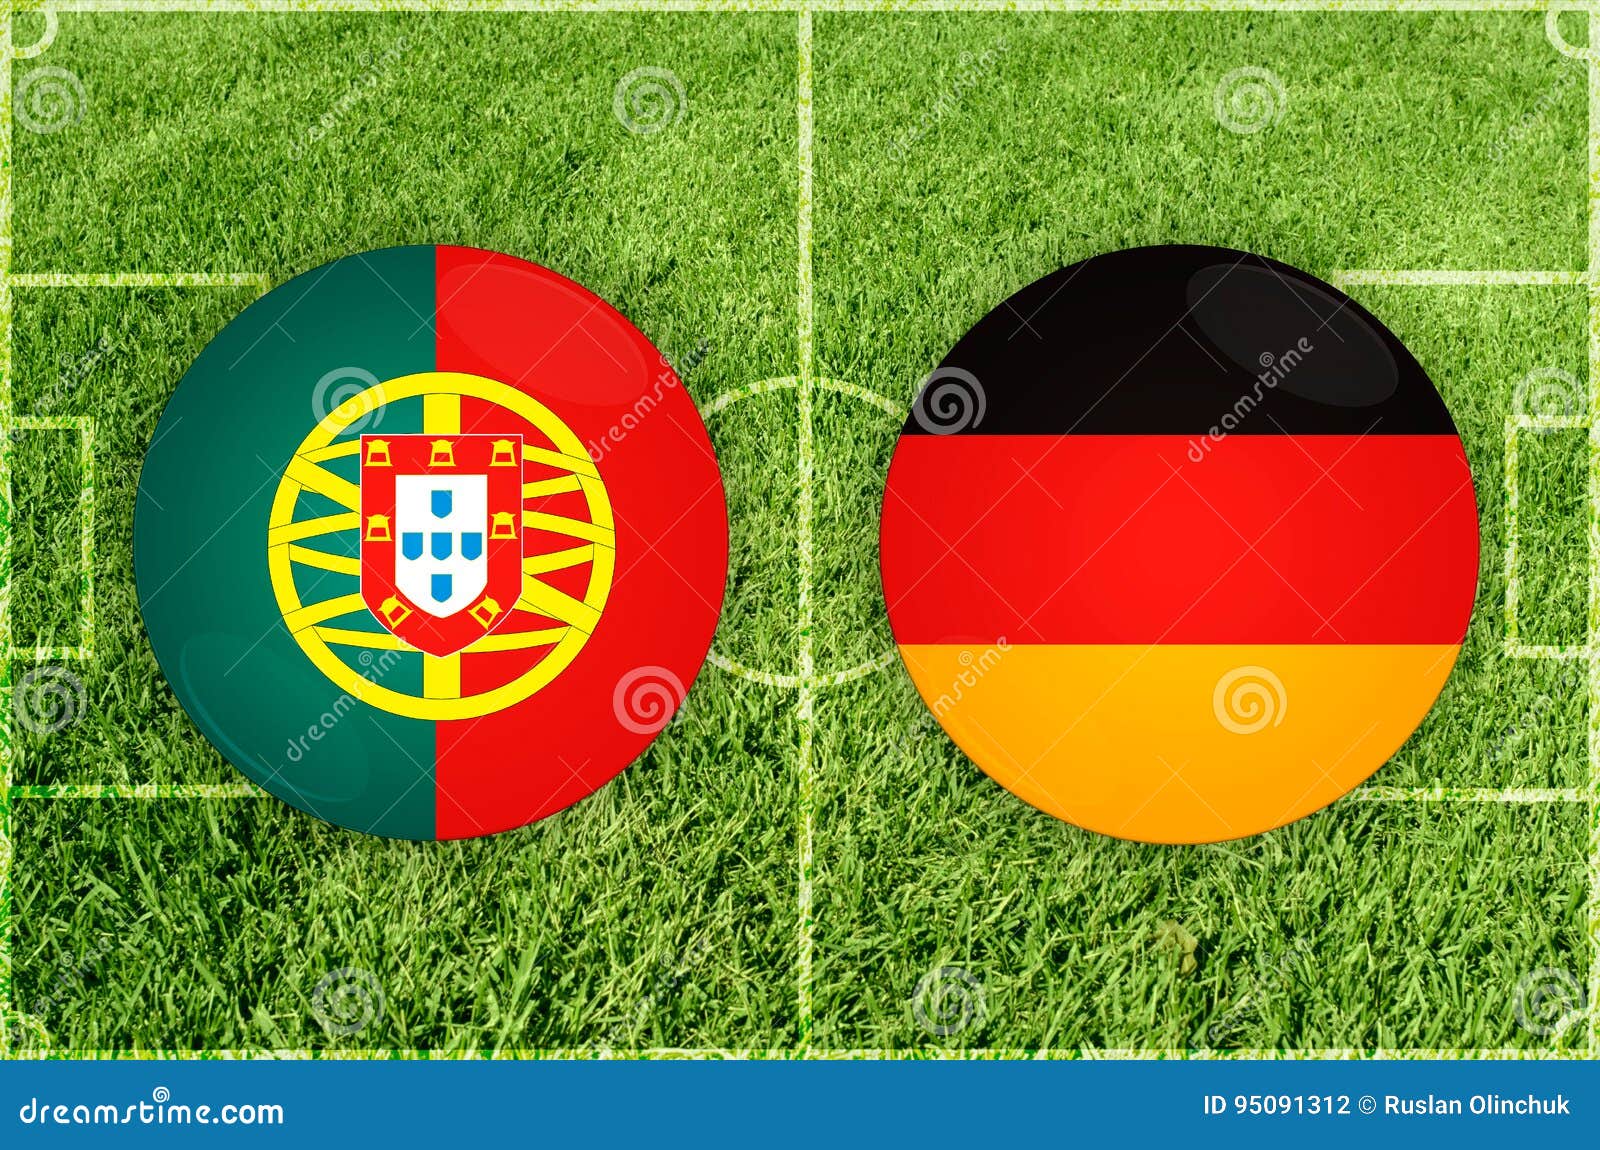 Germany vs portugal history